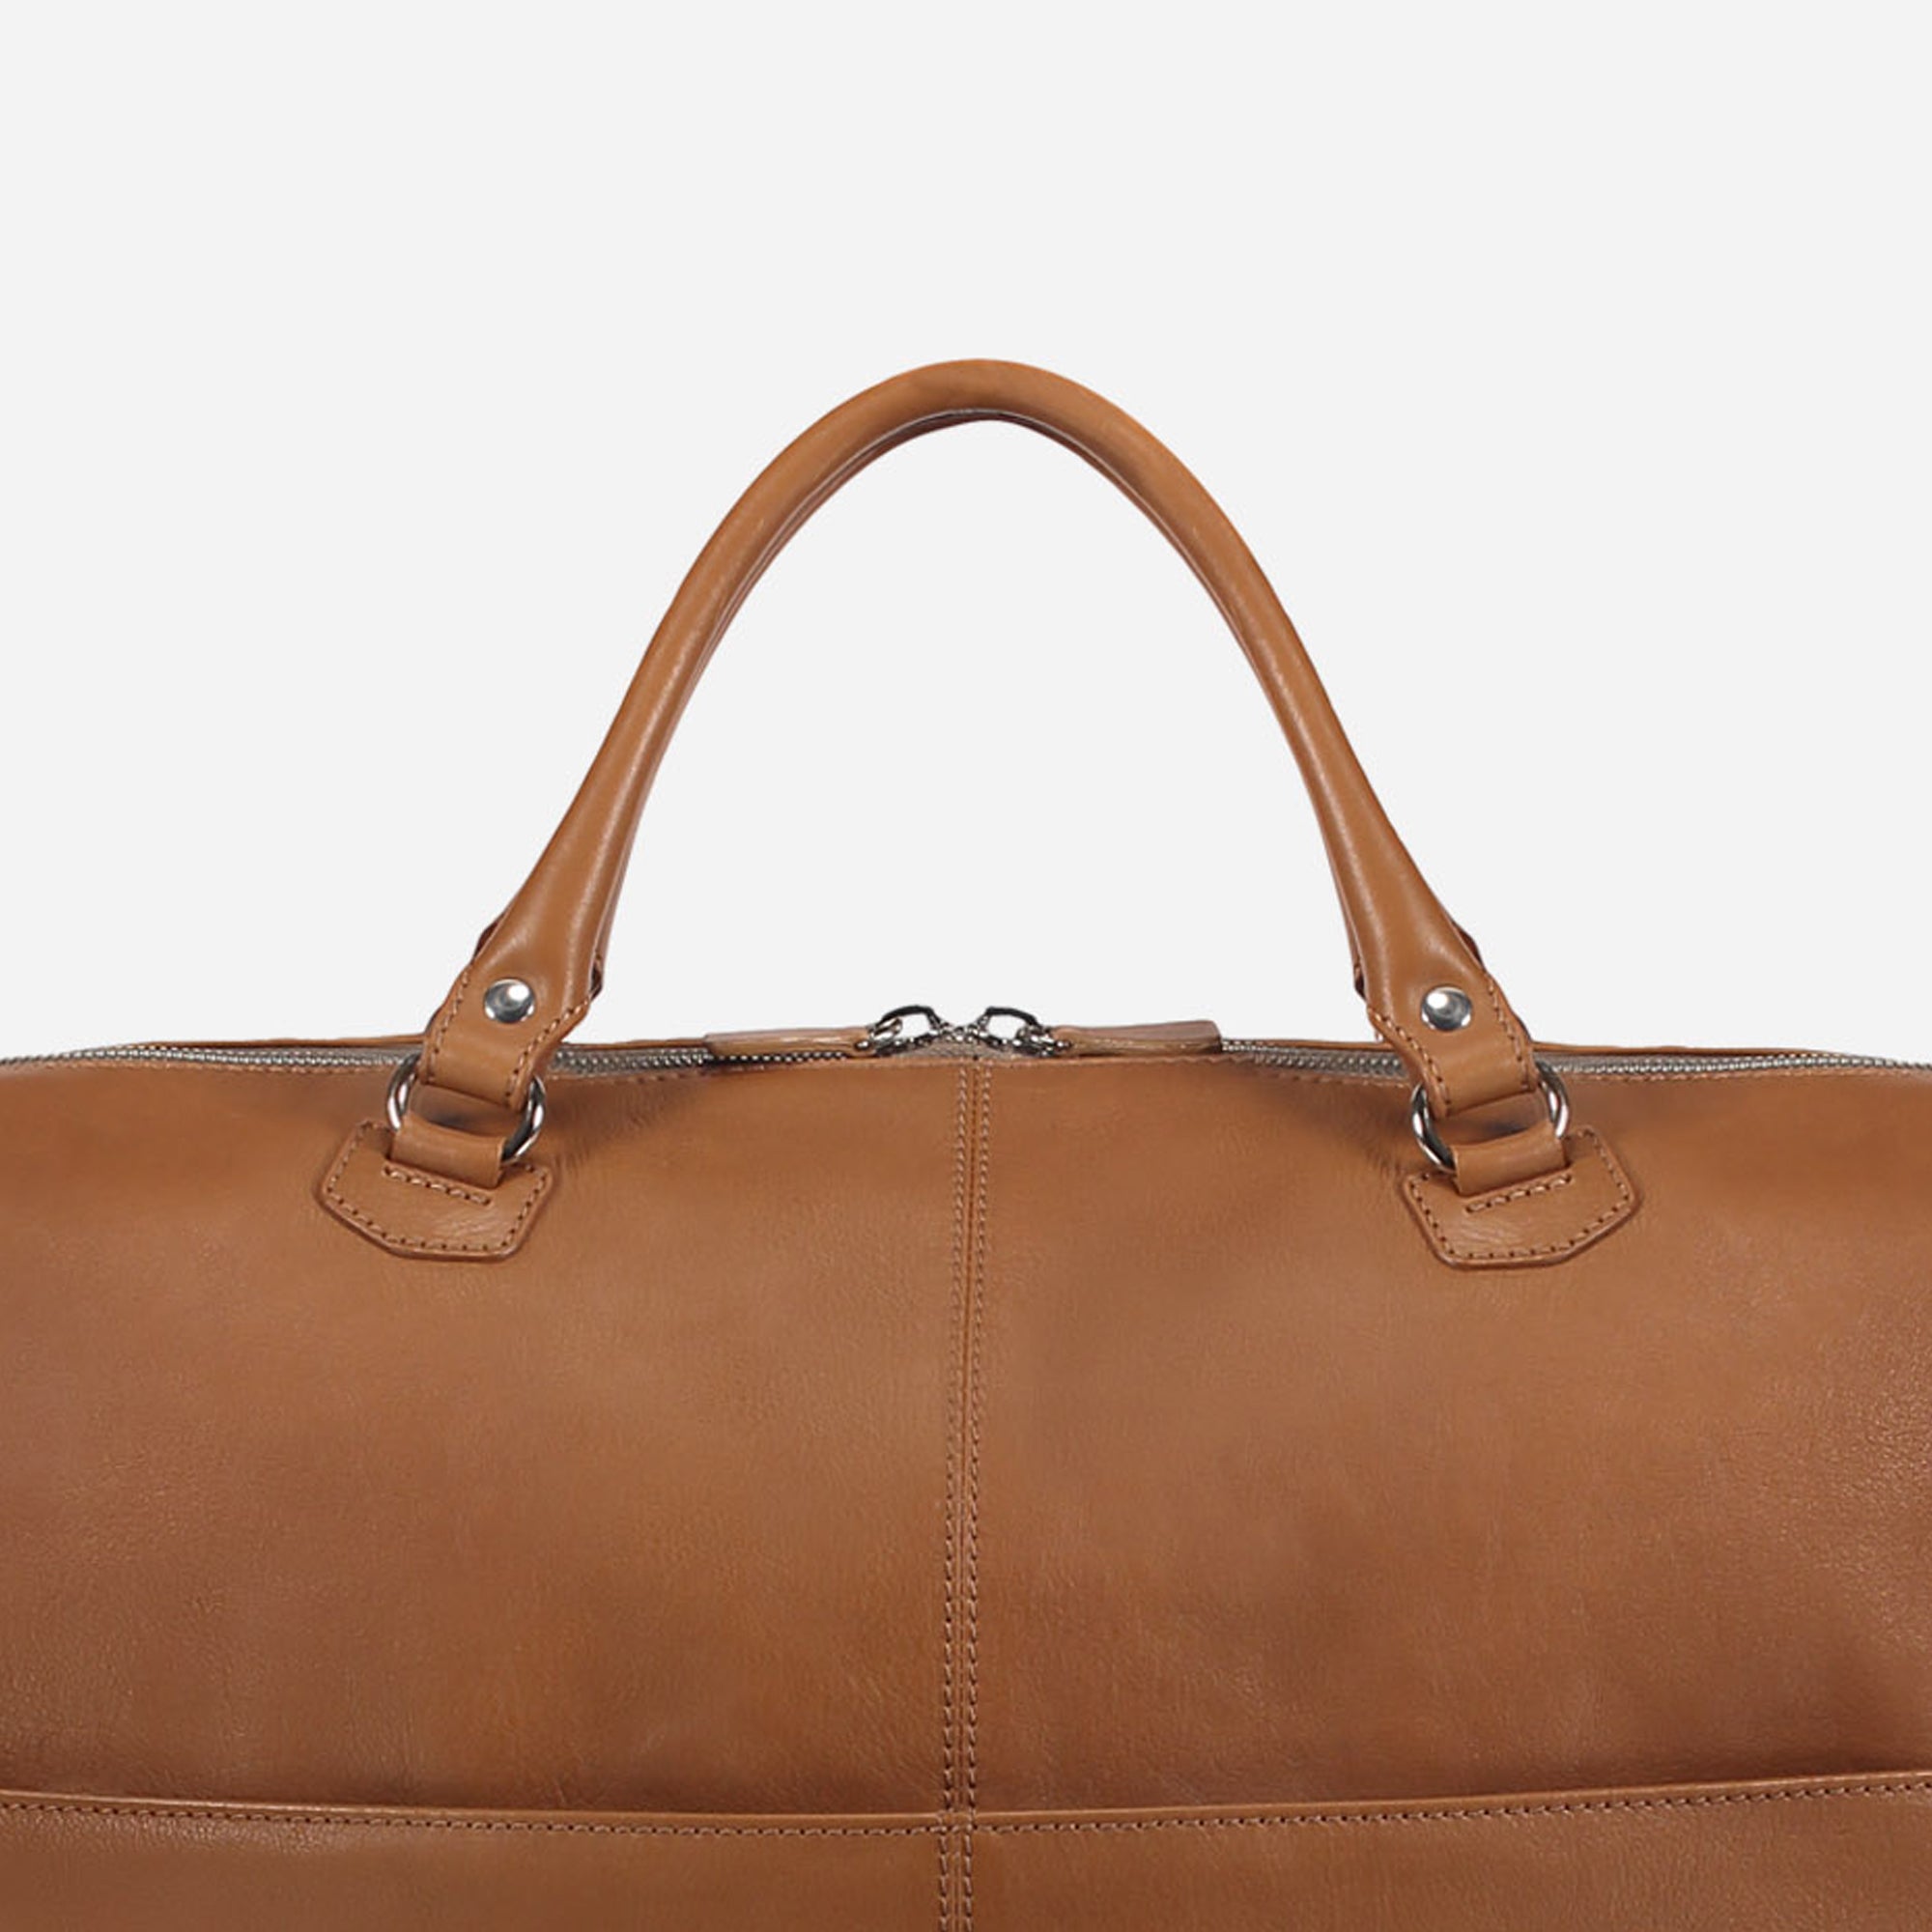 703L - DUFFLE BAG<br> Calfskin leather travel bag